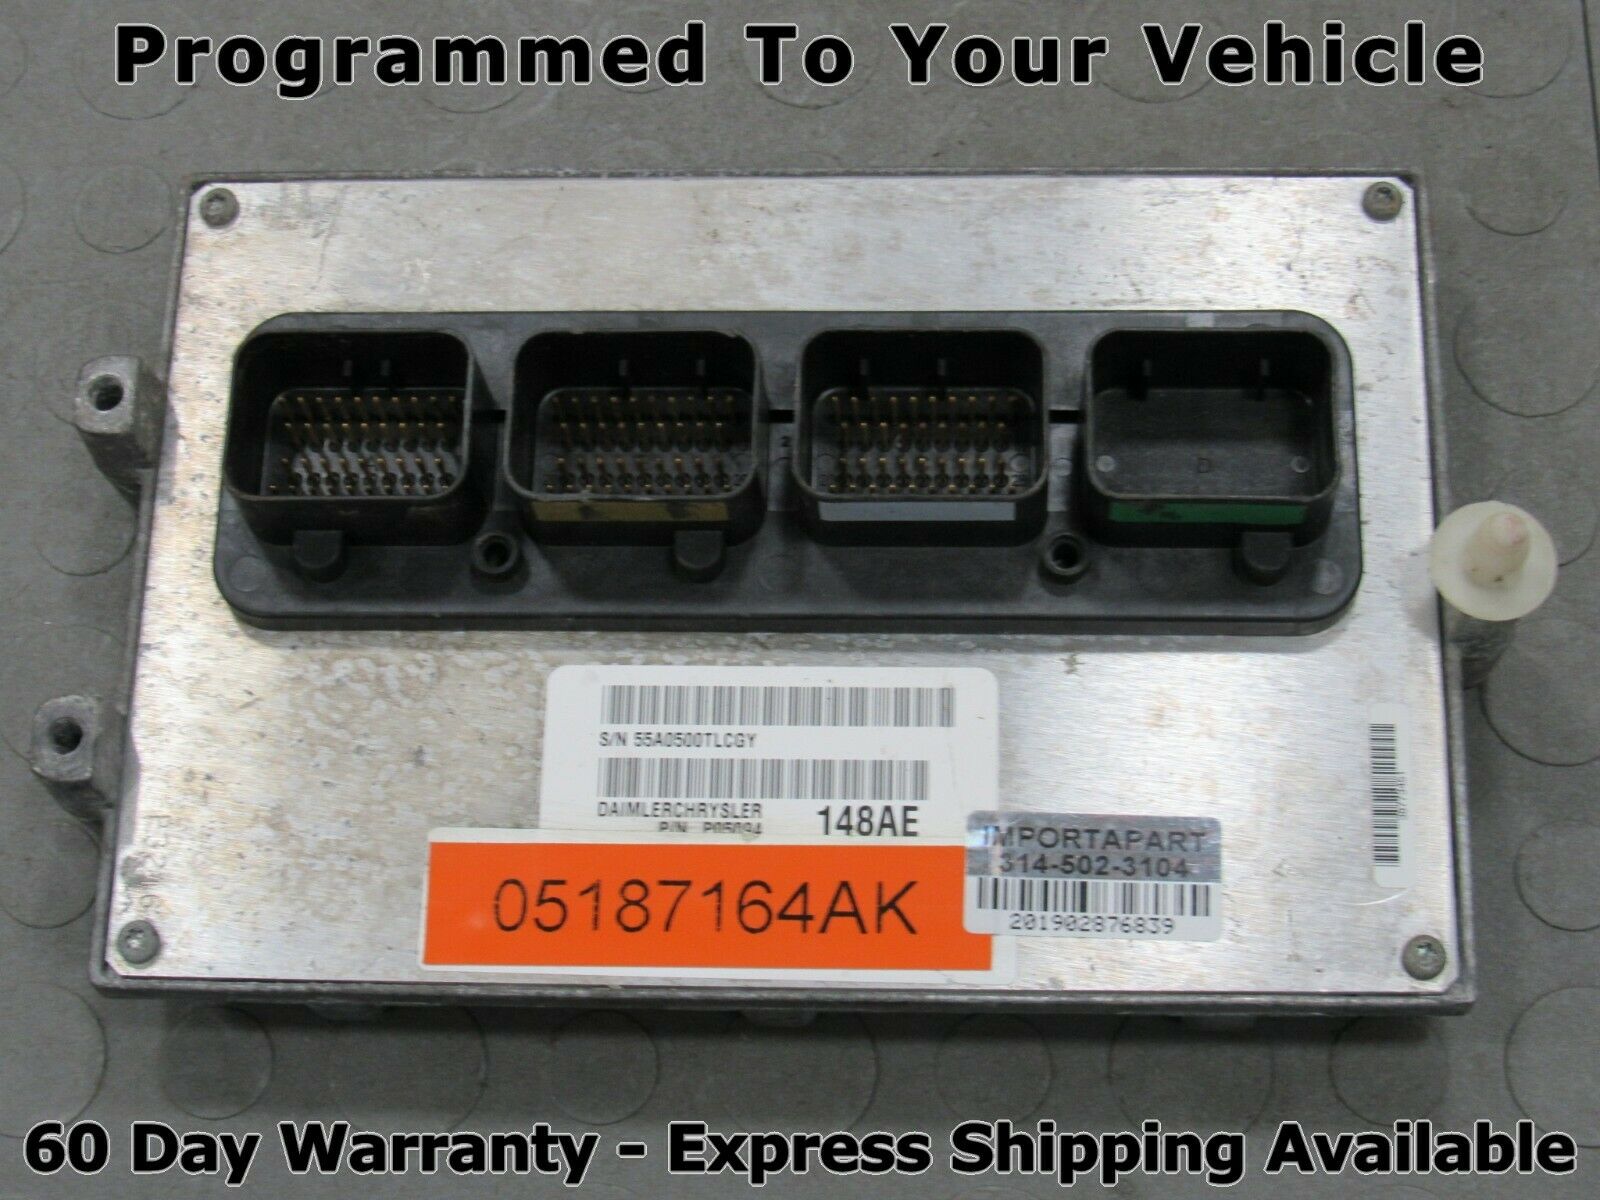 07 Jeep Wrangler JKU Rubicon ECU ECM PCM Engine Computer 05187164AK 164  PROG 839 – Importapart